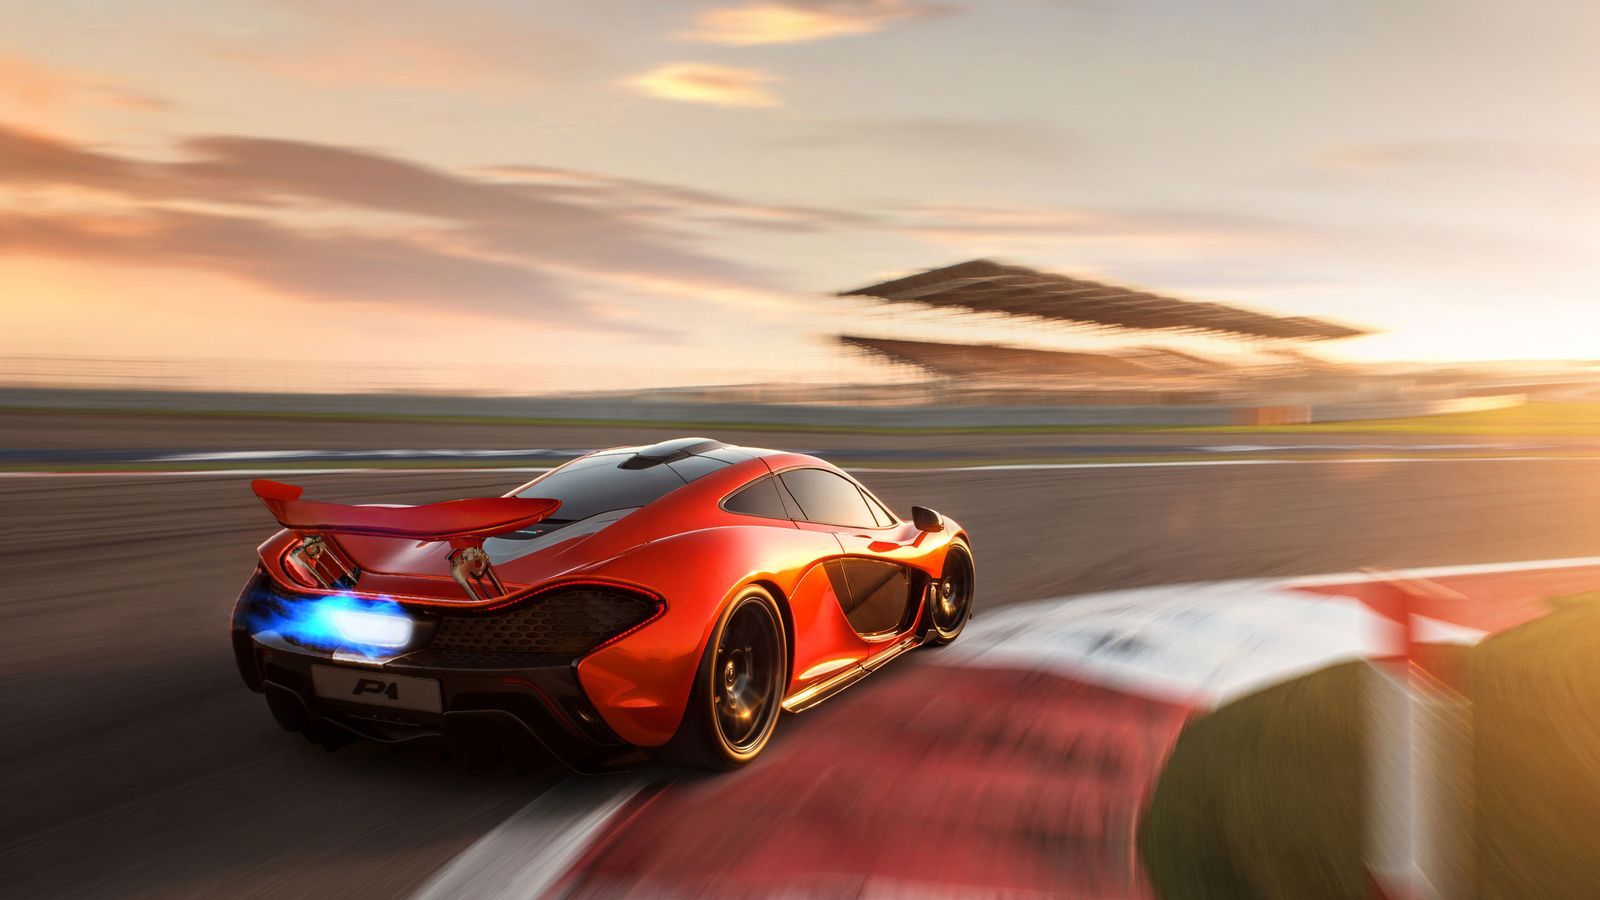 McLaren supercar wallpaper download 49679 - Business Class People